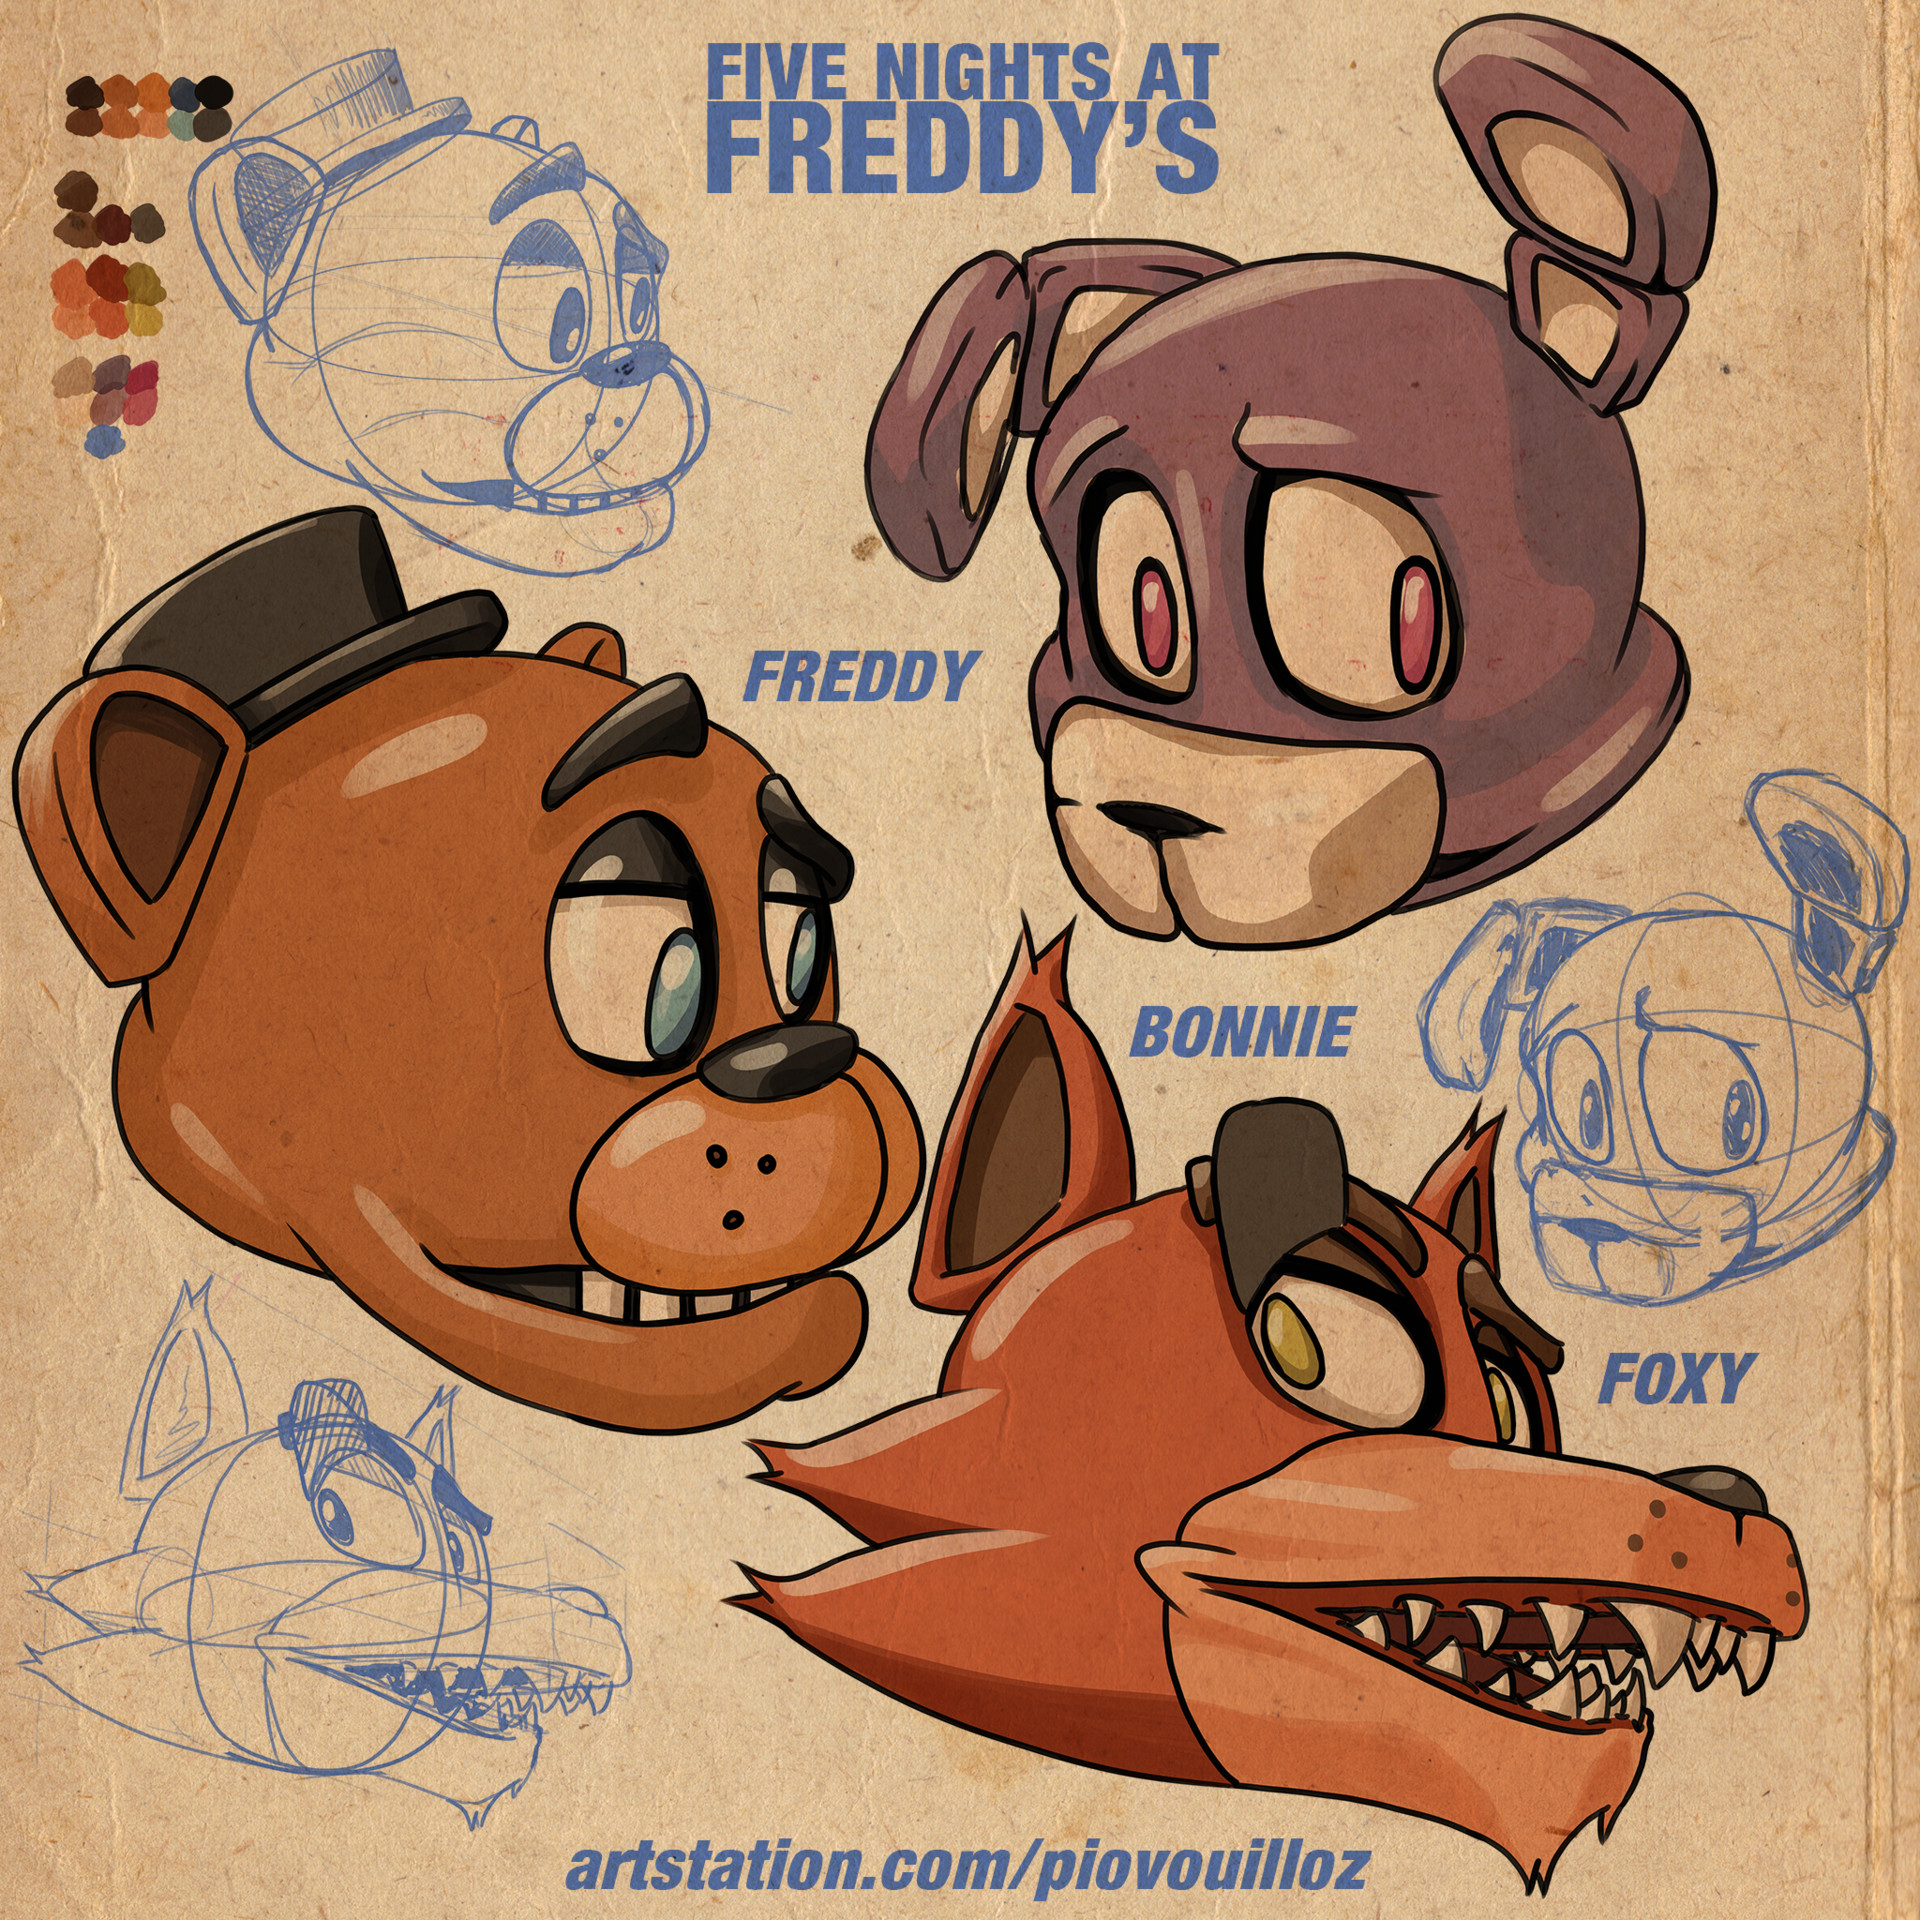 ArtStation - FNaF fanart Freddy & Foxy